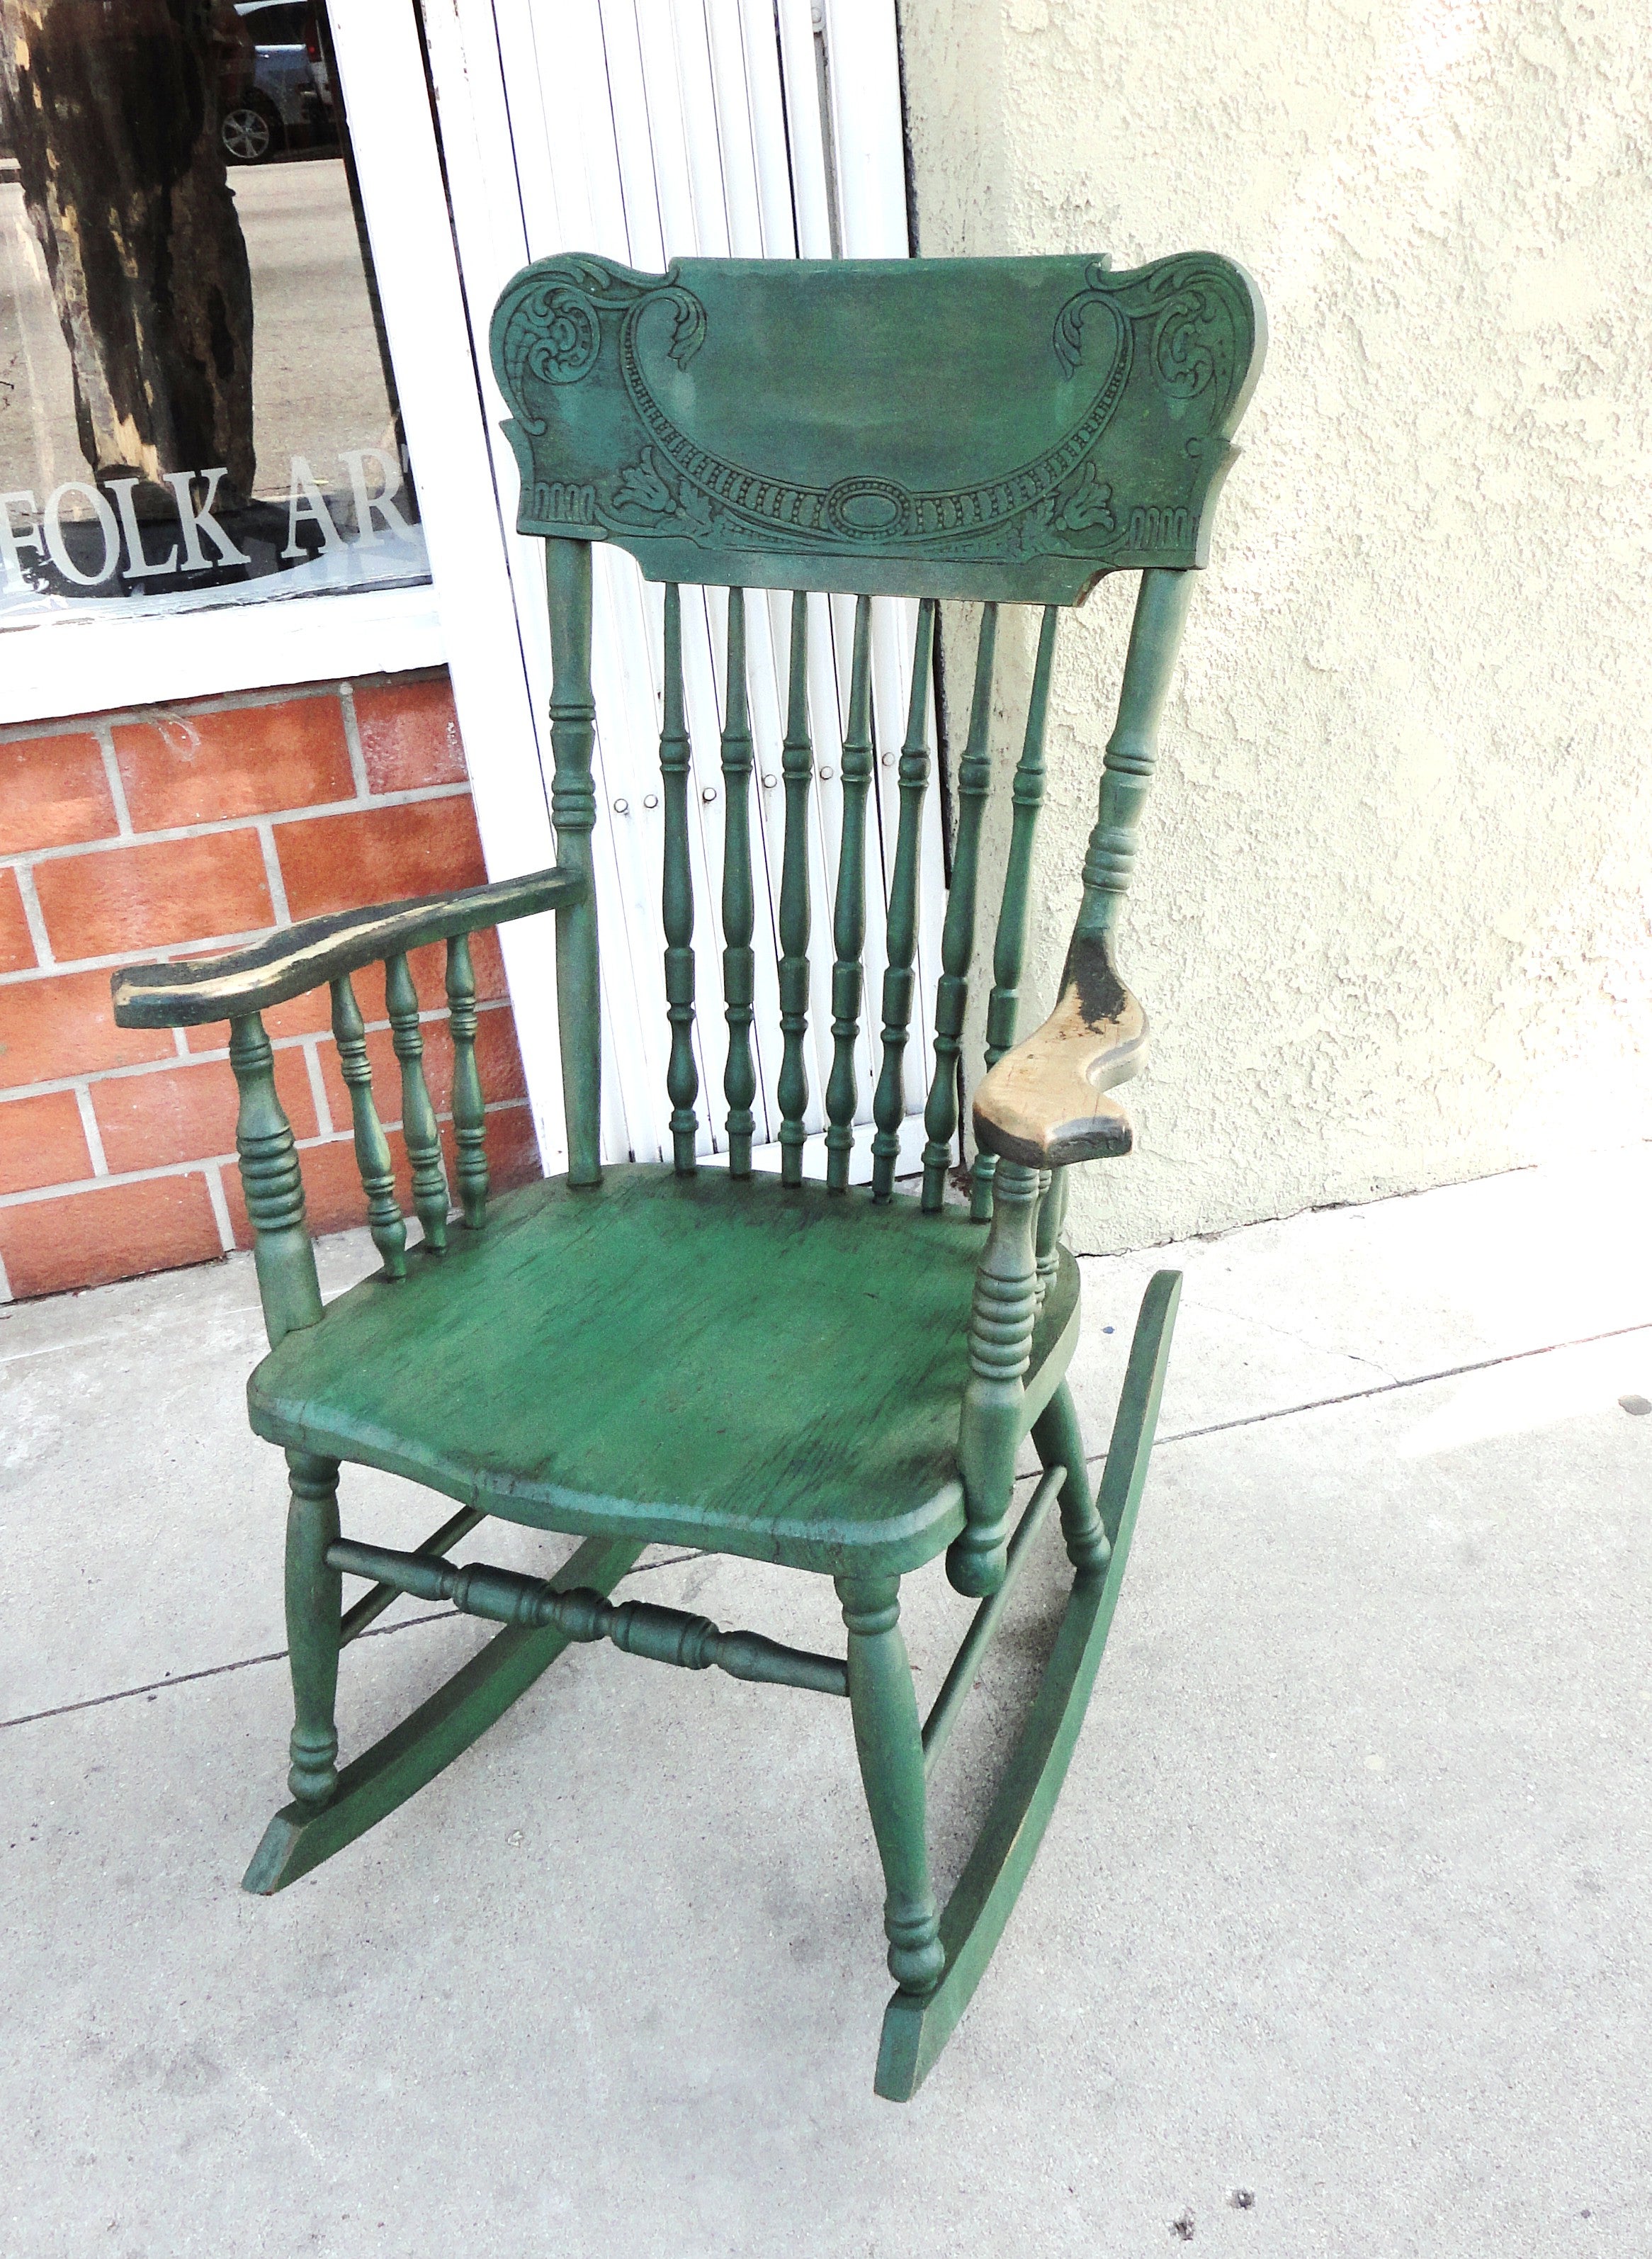 19thc Original Green Rustic Pressed Back Rocking Chair